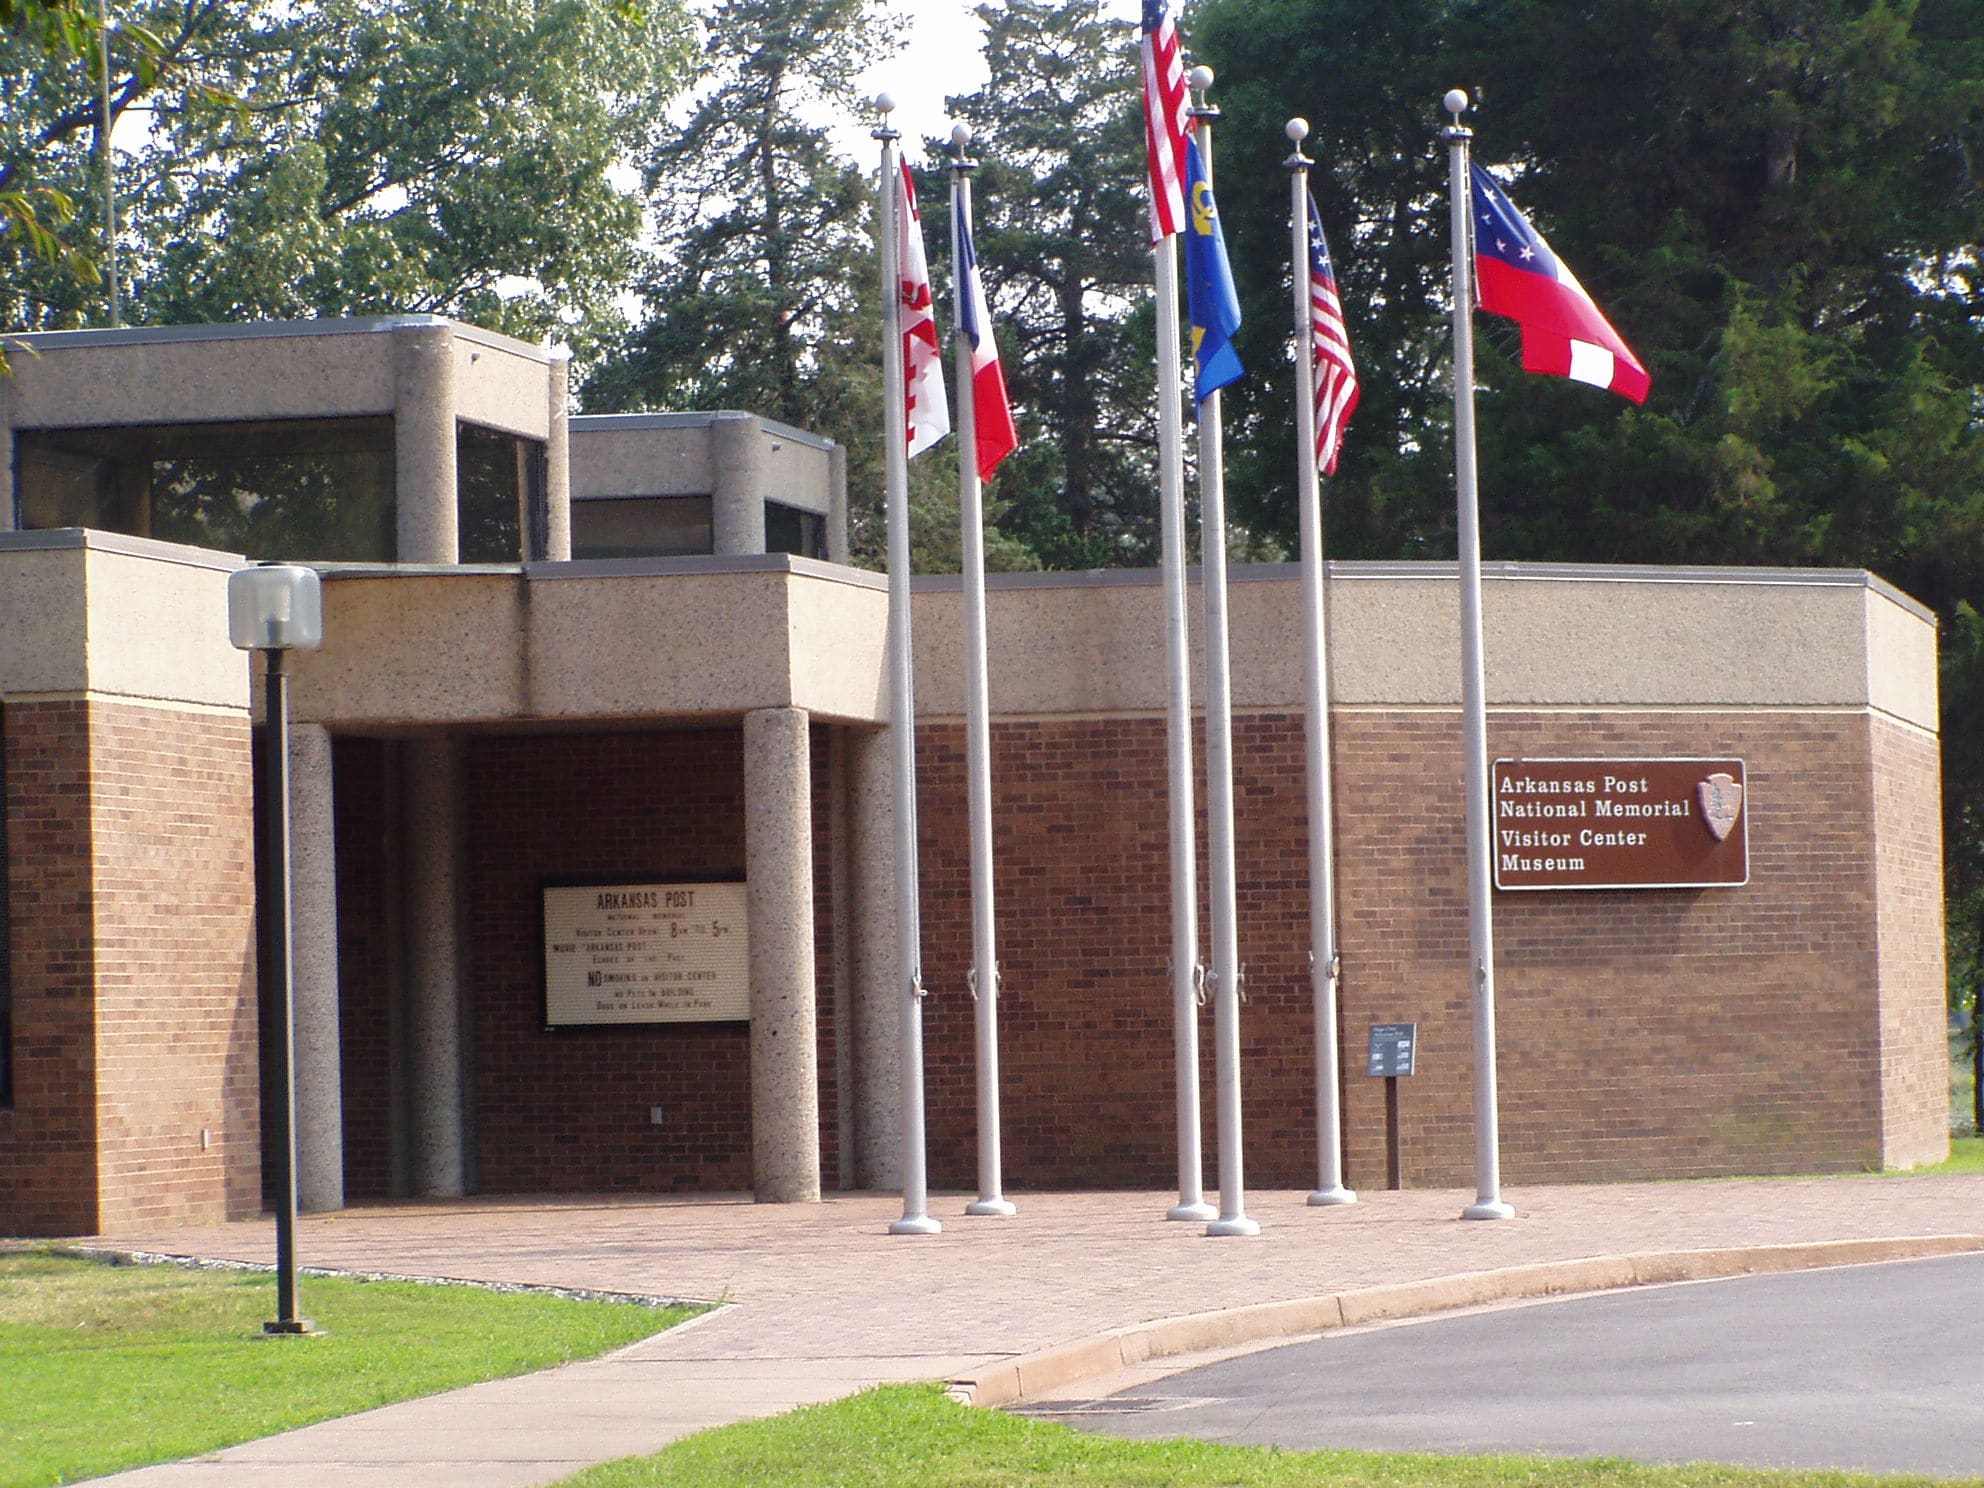 Arkansas Post National Memorial Visitor Center